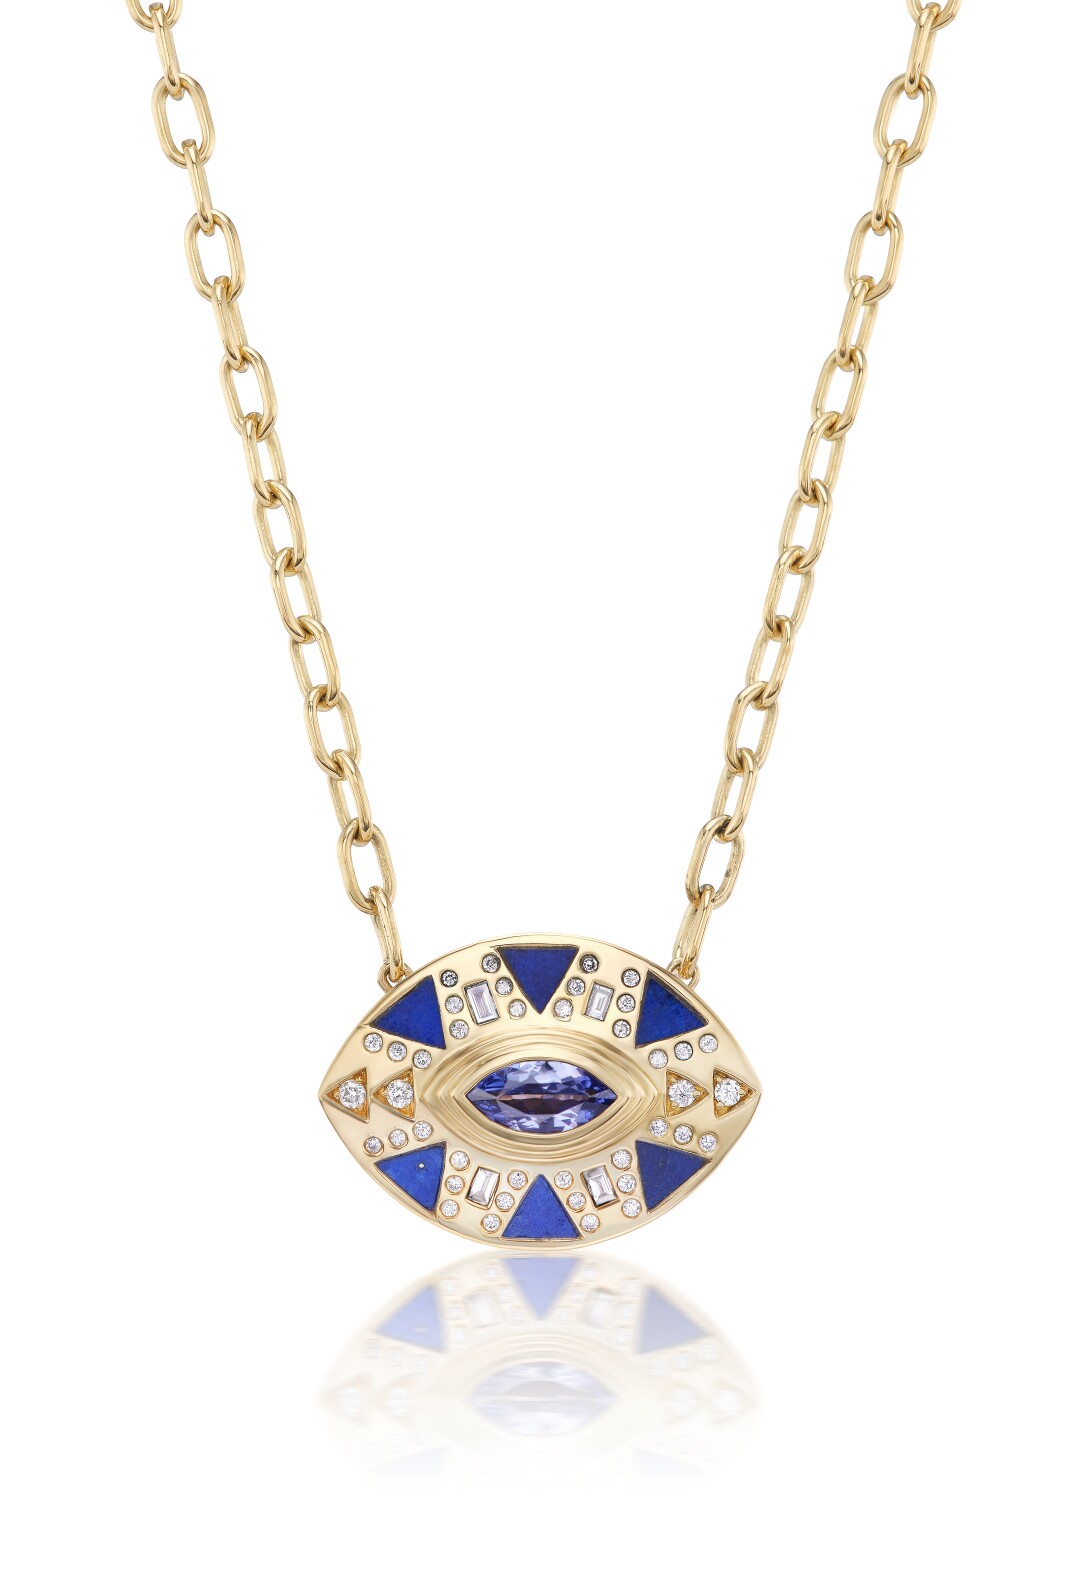 Harwell Godfrey cleo pendant necklace, marquis blue.